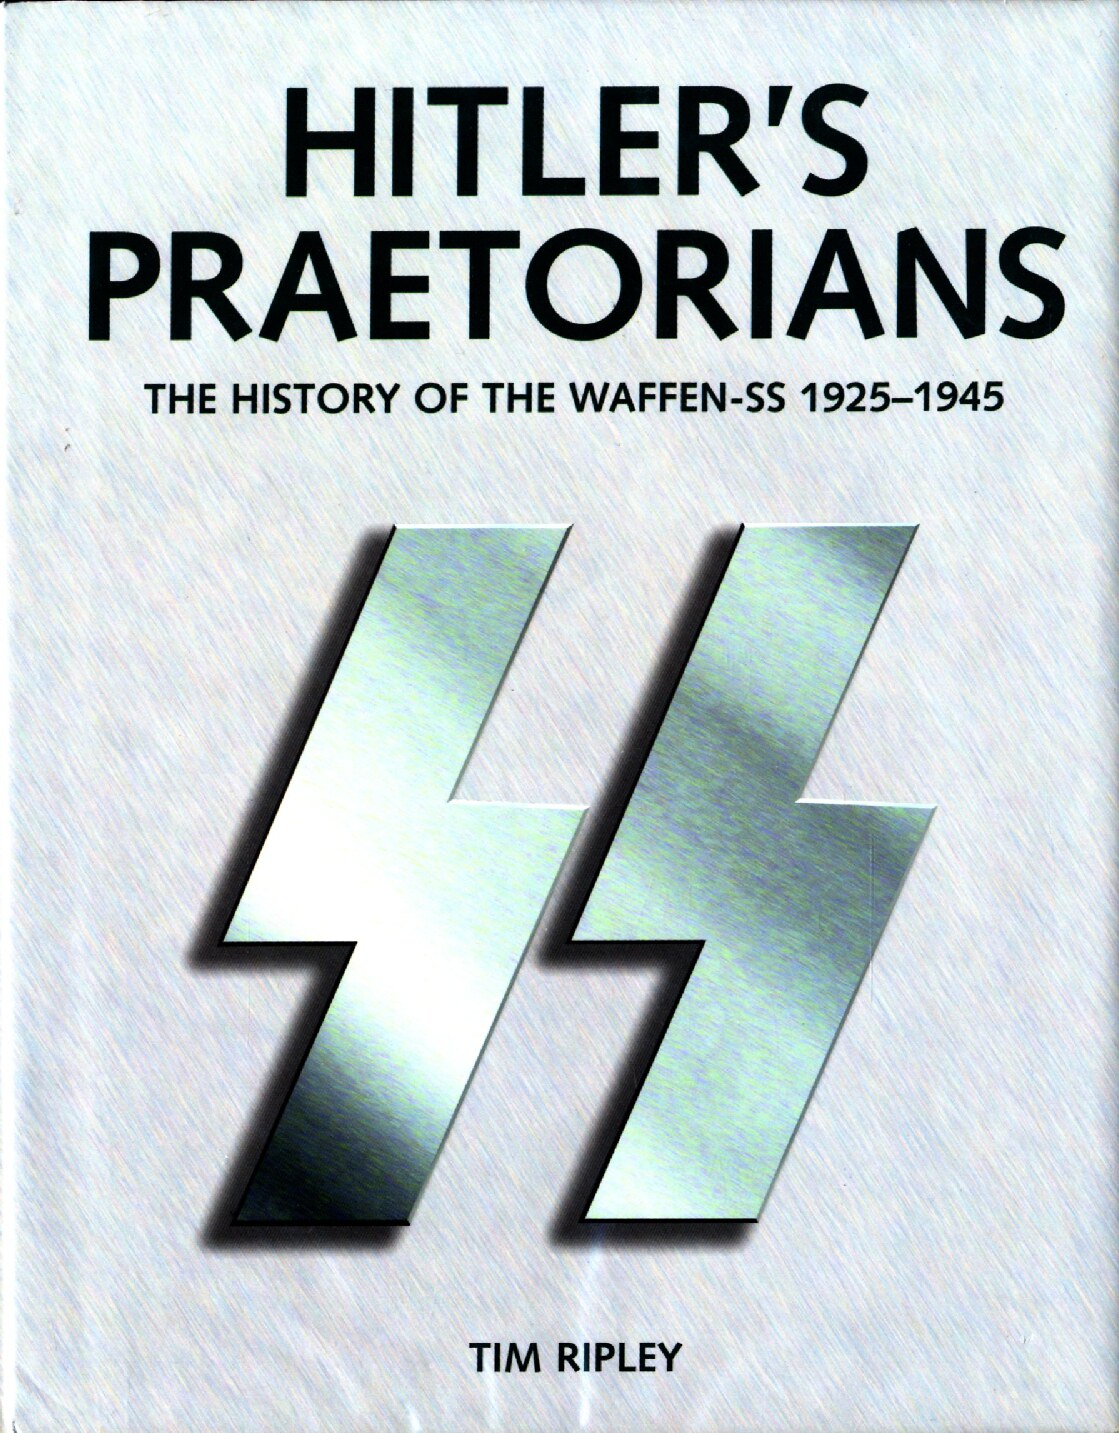 Ripley, Tim; Hitler's Praetorians; The History Of The Waffen-SS 1925-1945